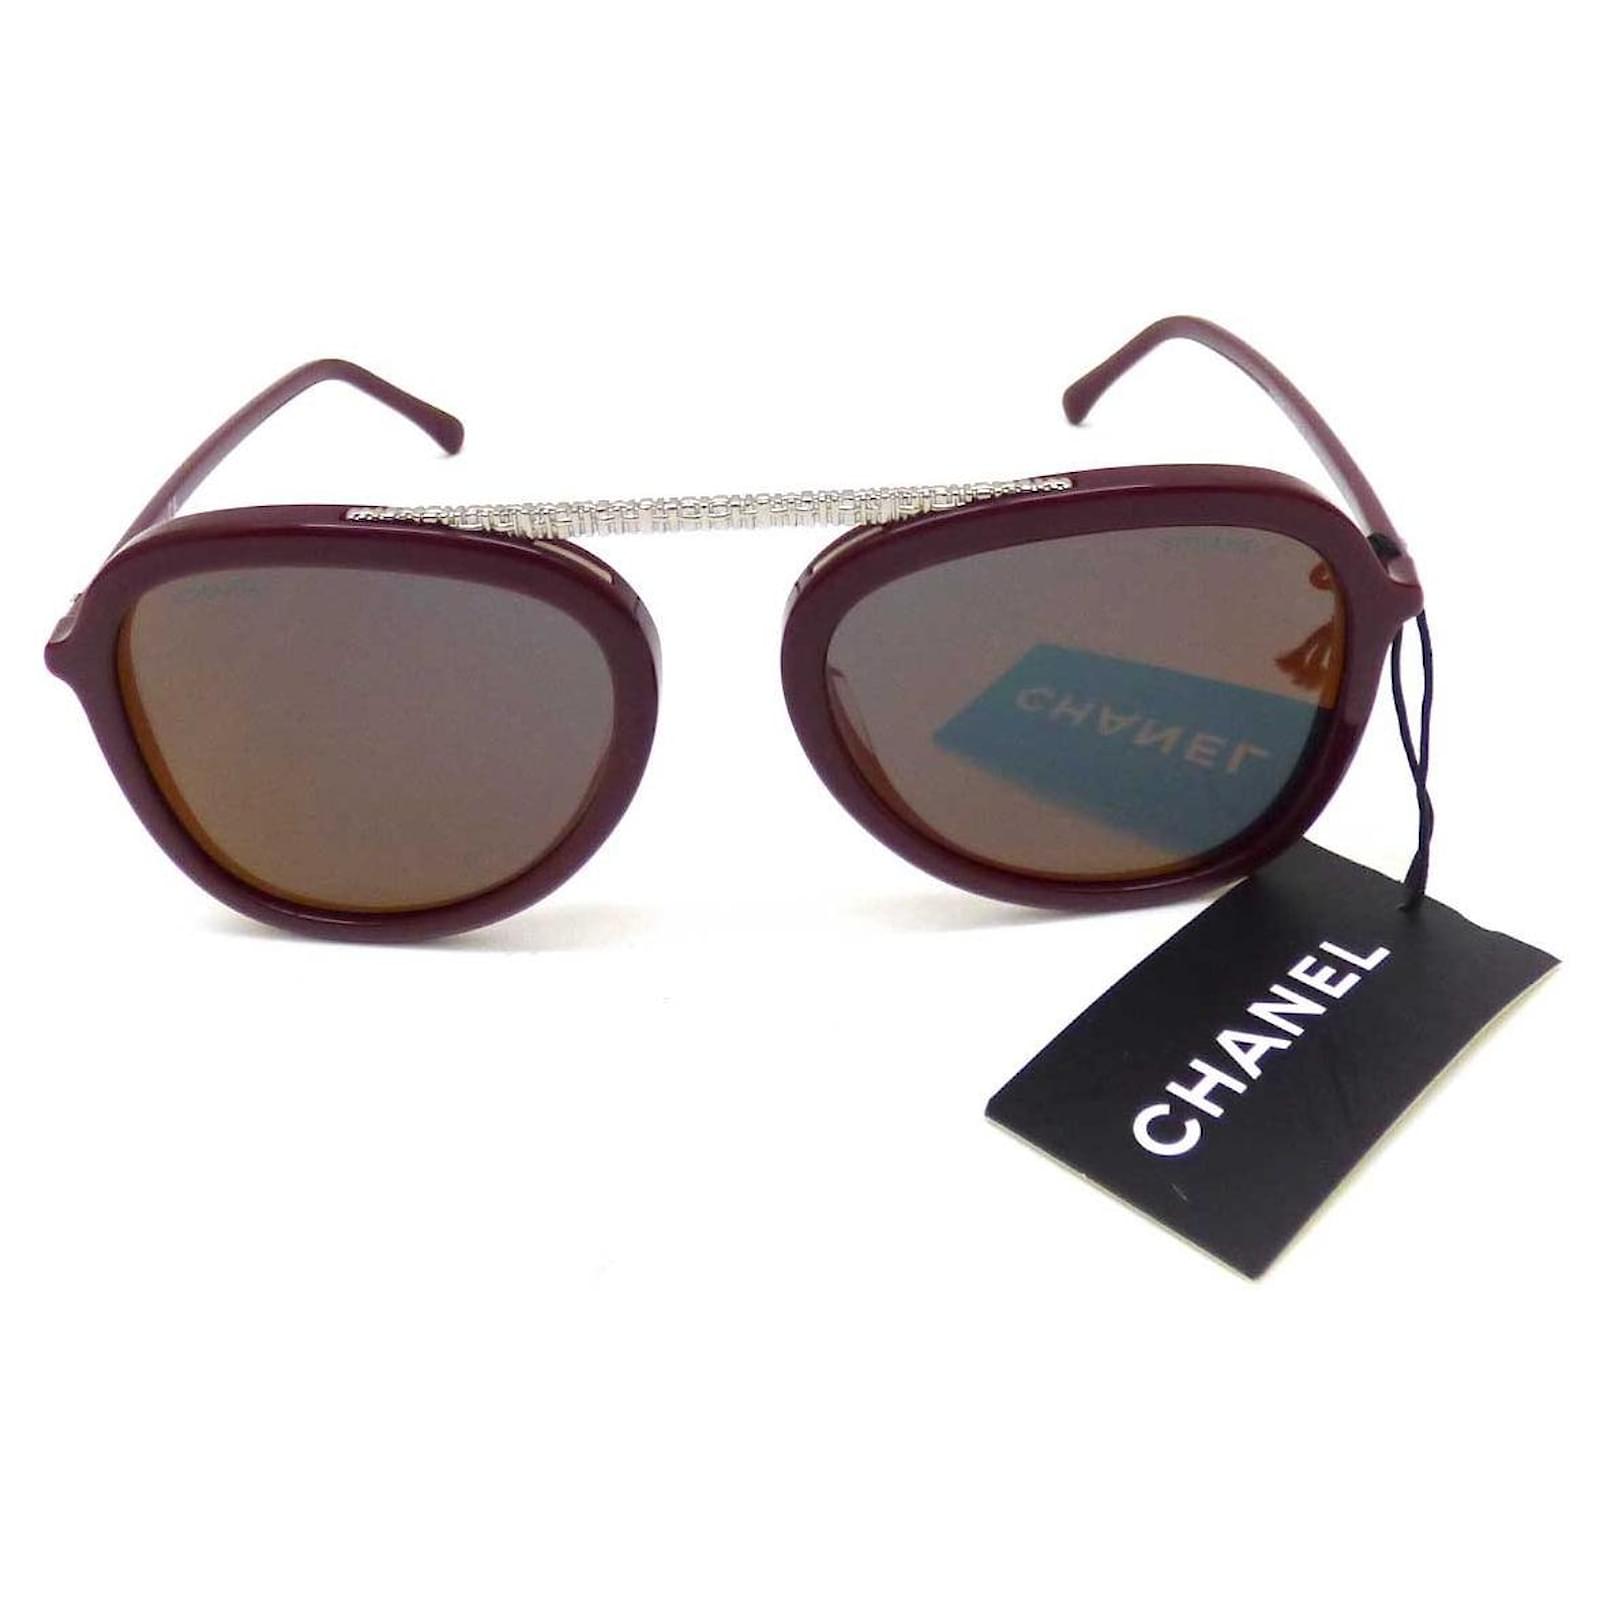 Used] CHANEL Decorative Design Sunglasses Unisex Bordeaux Dark red